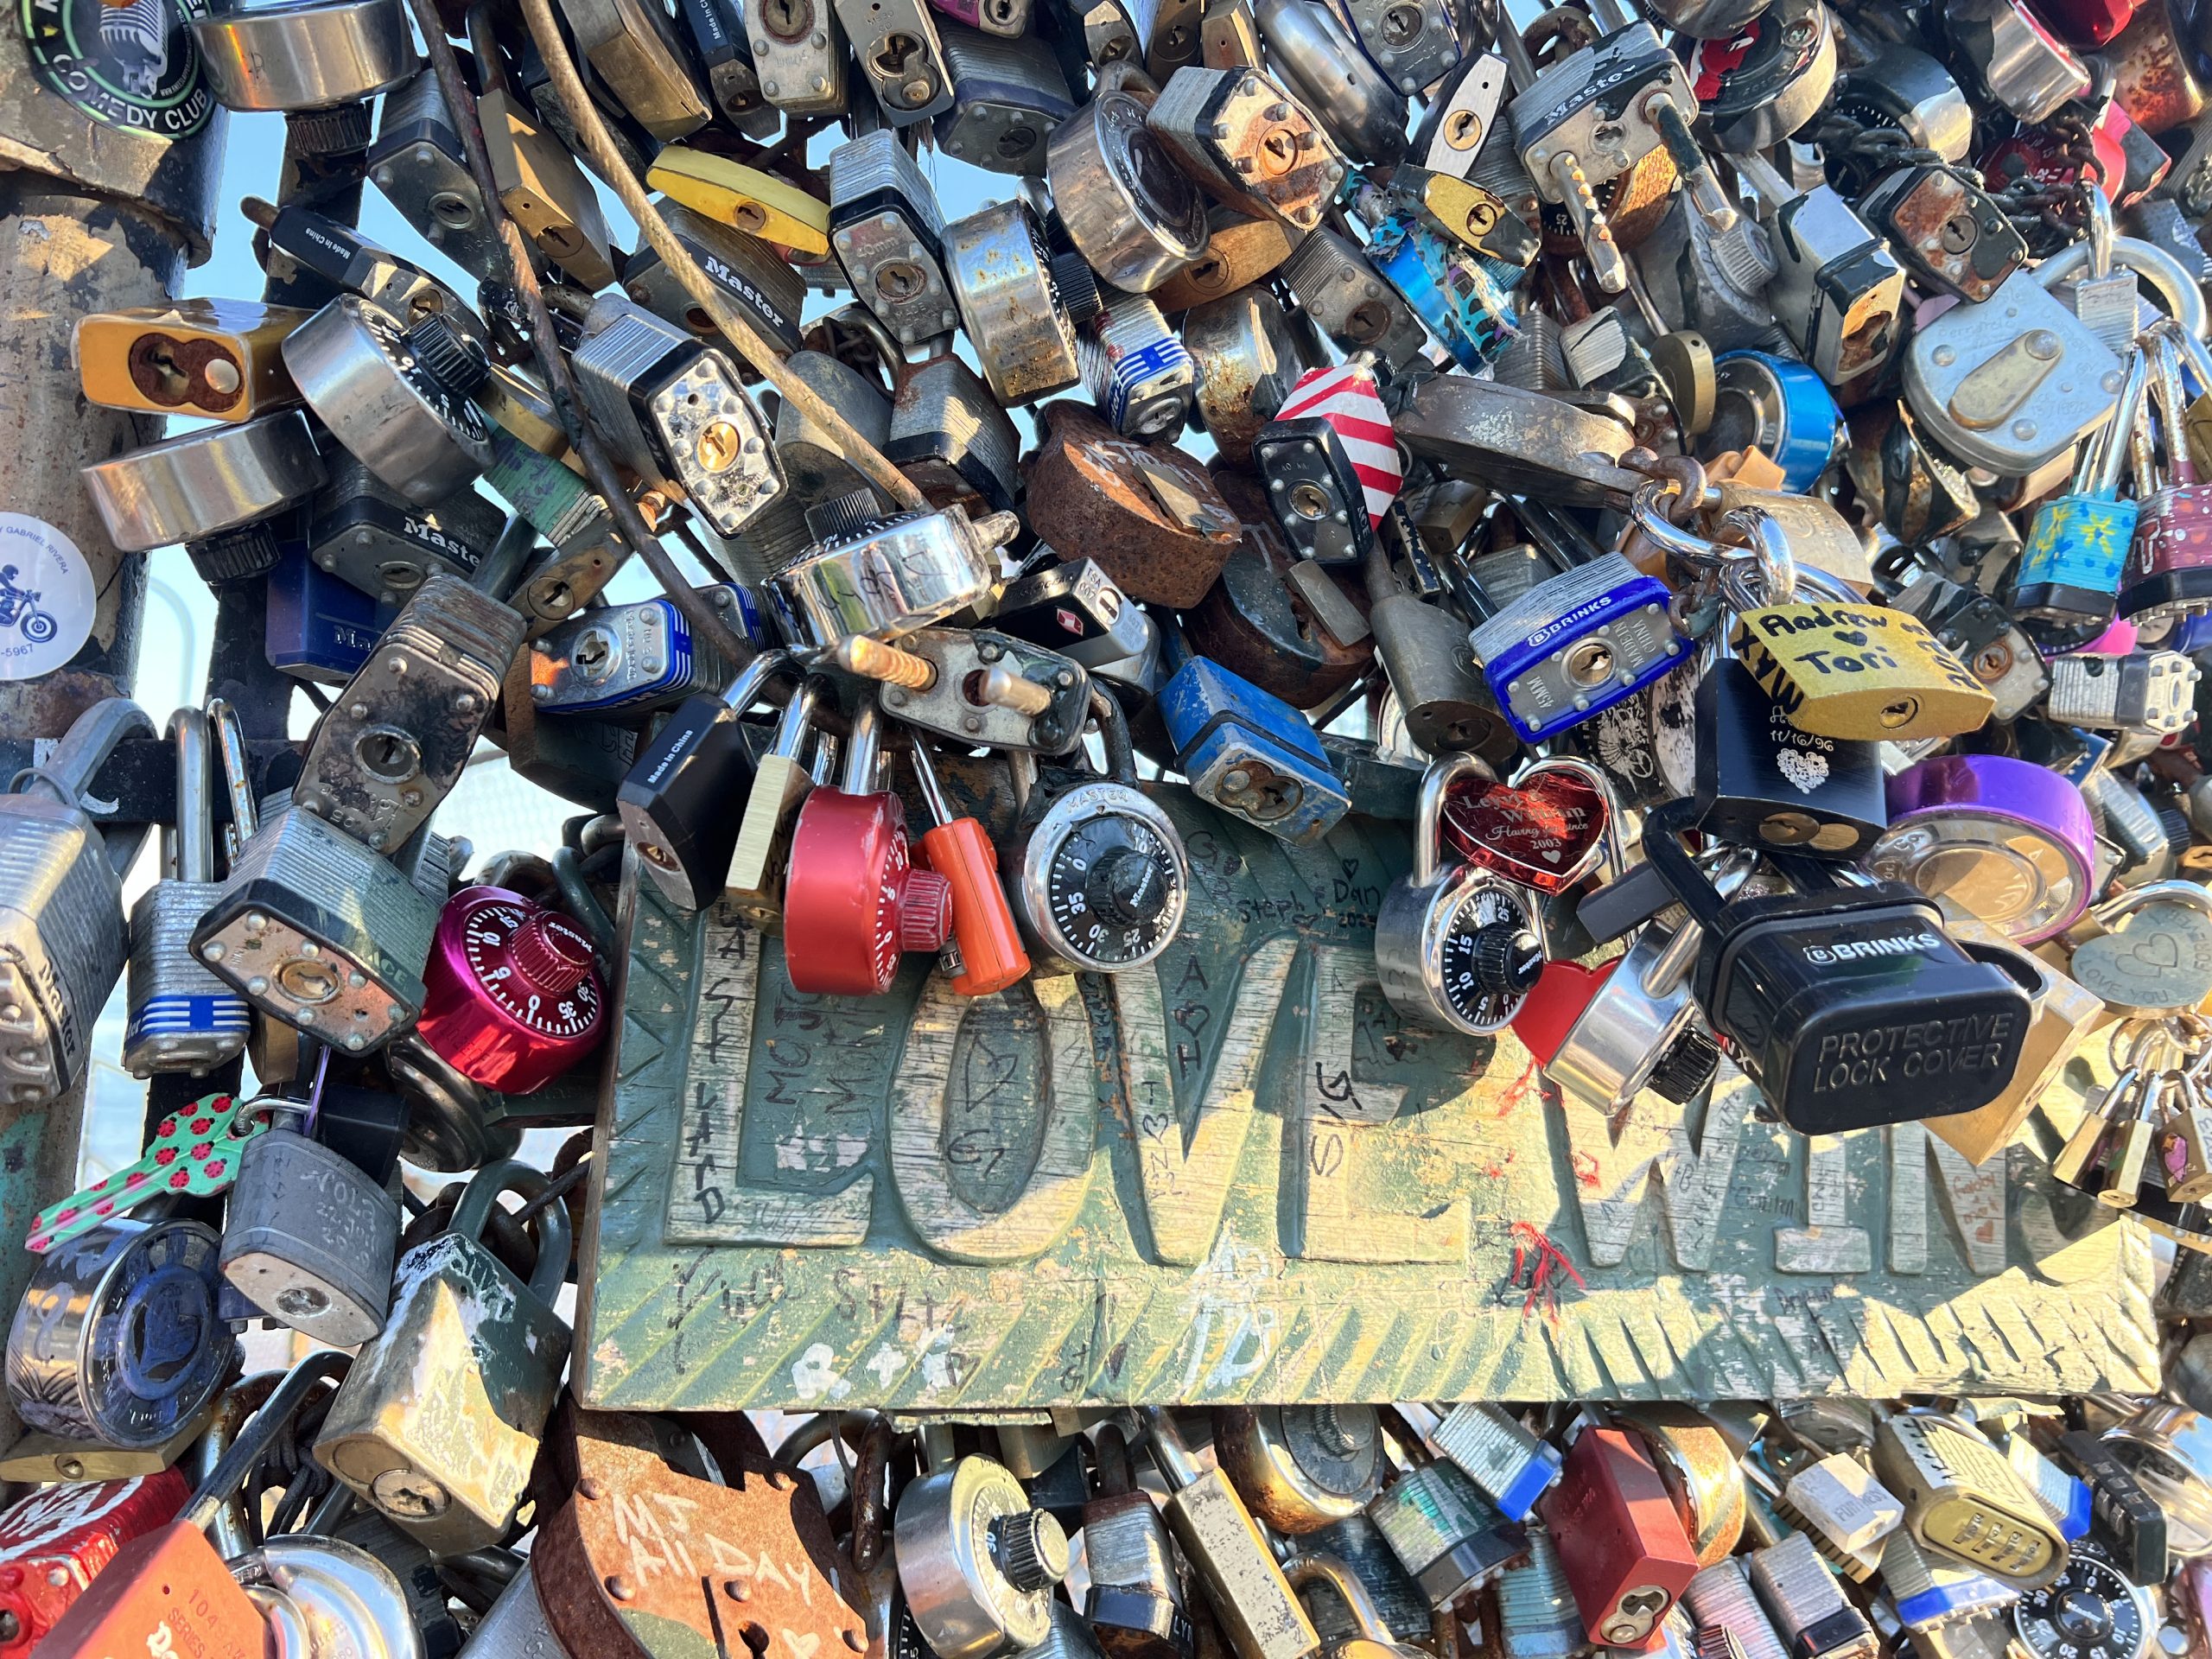 Love Wins padlock art piece in New Orleans